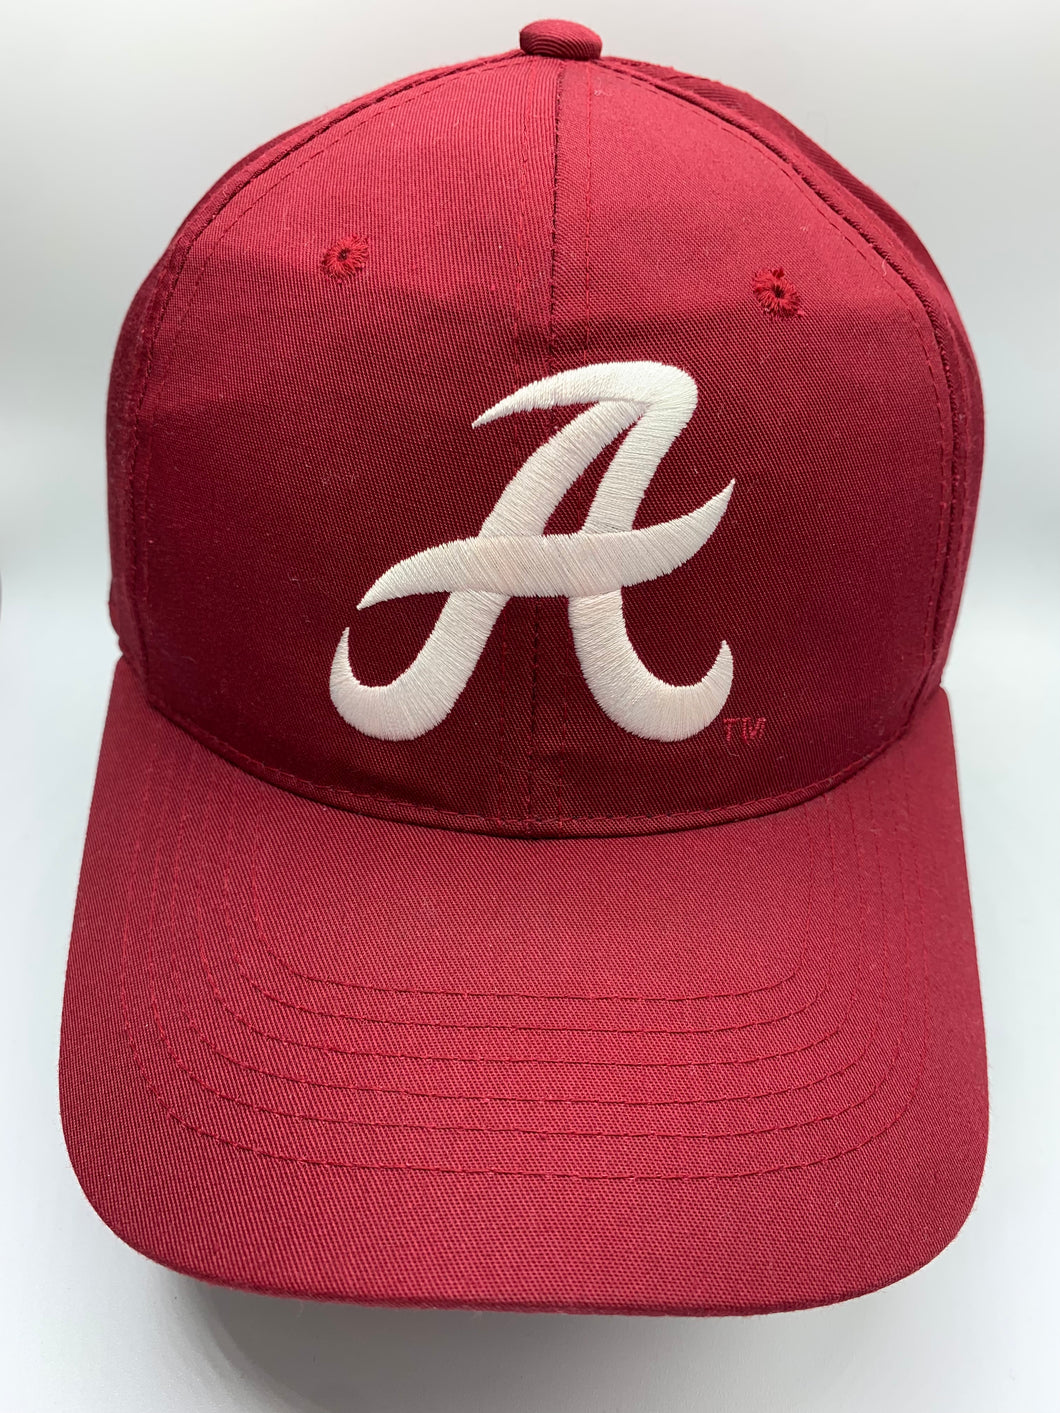 Vintage Alabama Snapback Hat